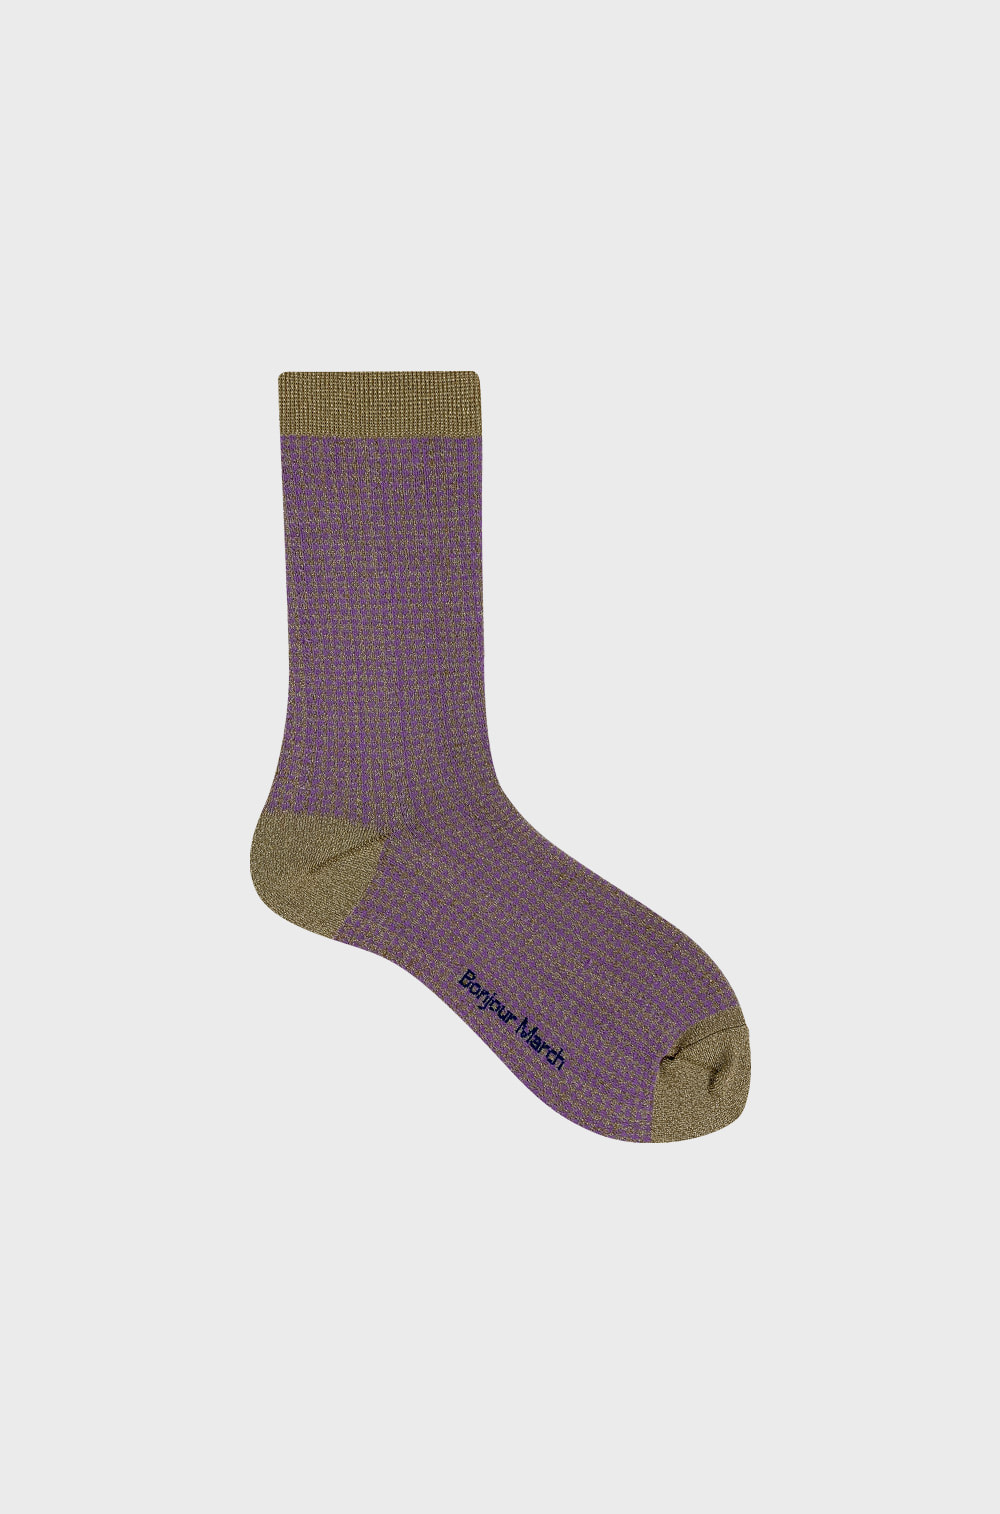 Amethyst socks